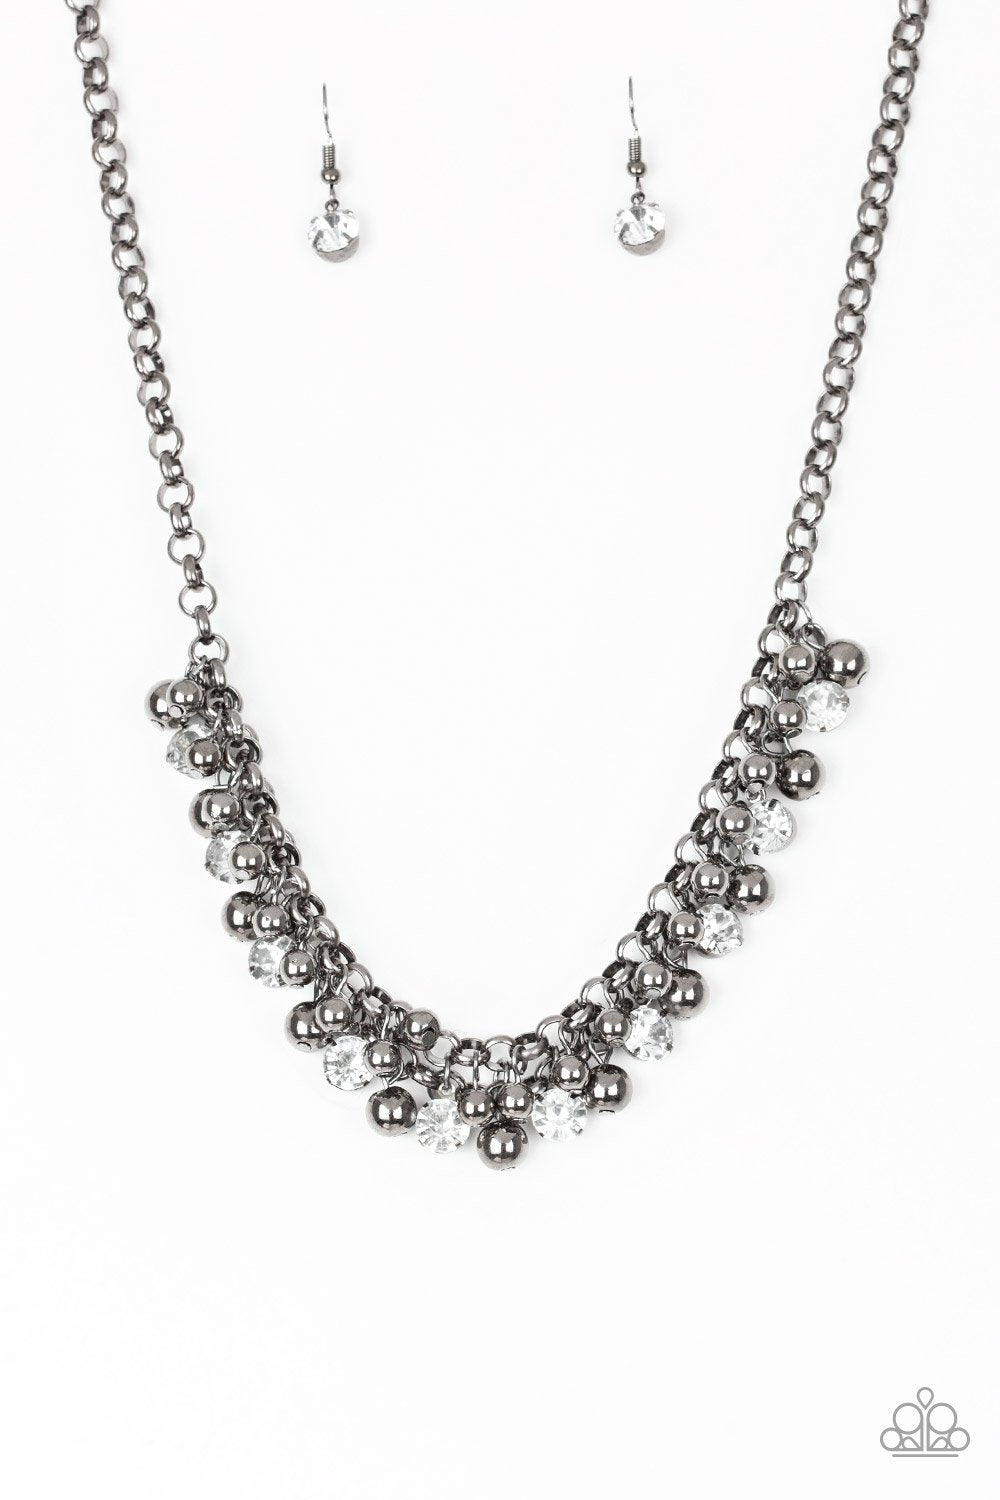 Wall Street Winner Gunmetal Black and White Rhinestone Necklace - Paparazzi Accessories-CarasShop.com - $5 Jewelry by Cara Jewels